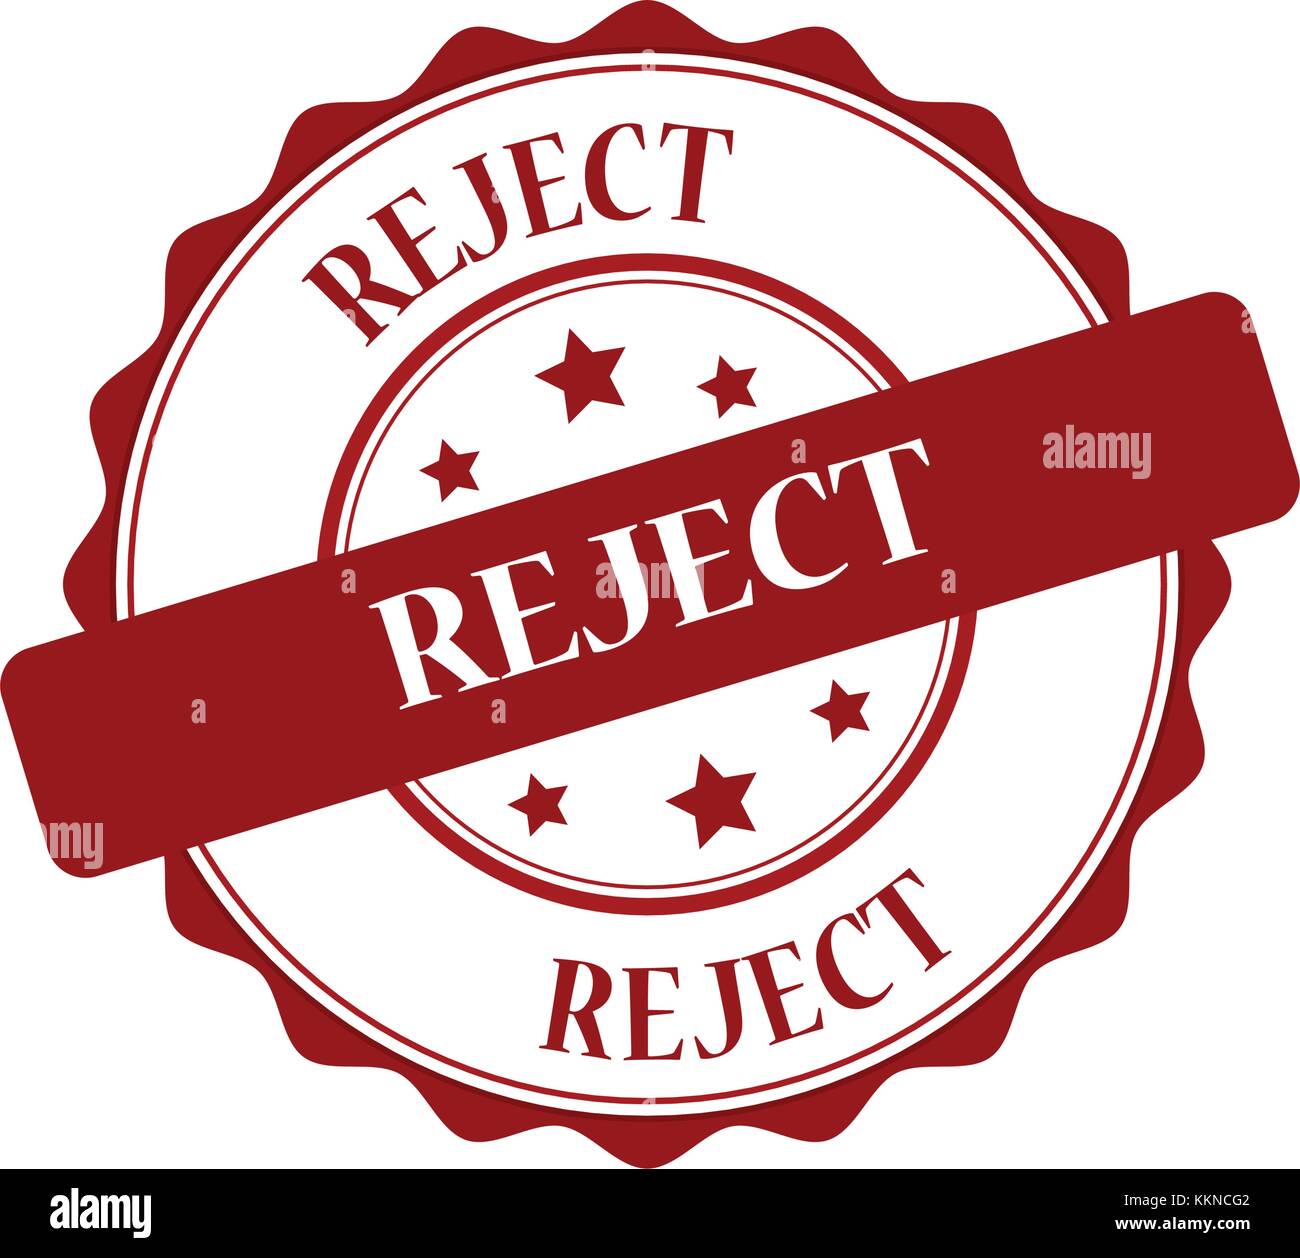 Reject stamp illustration Stock Vector